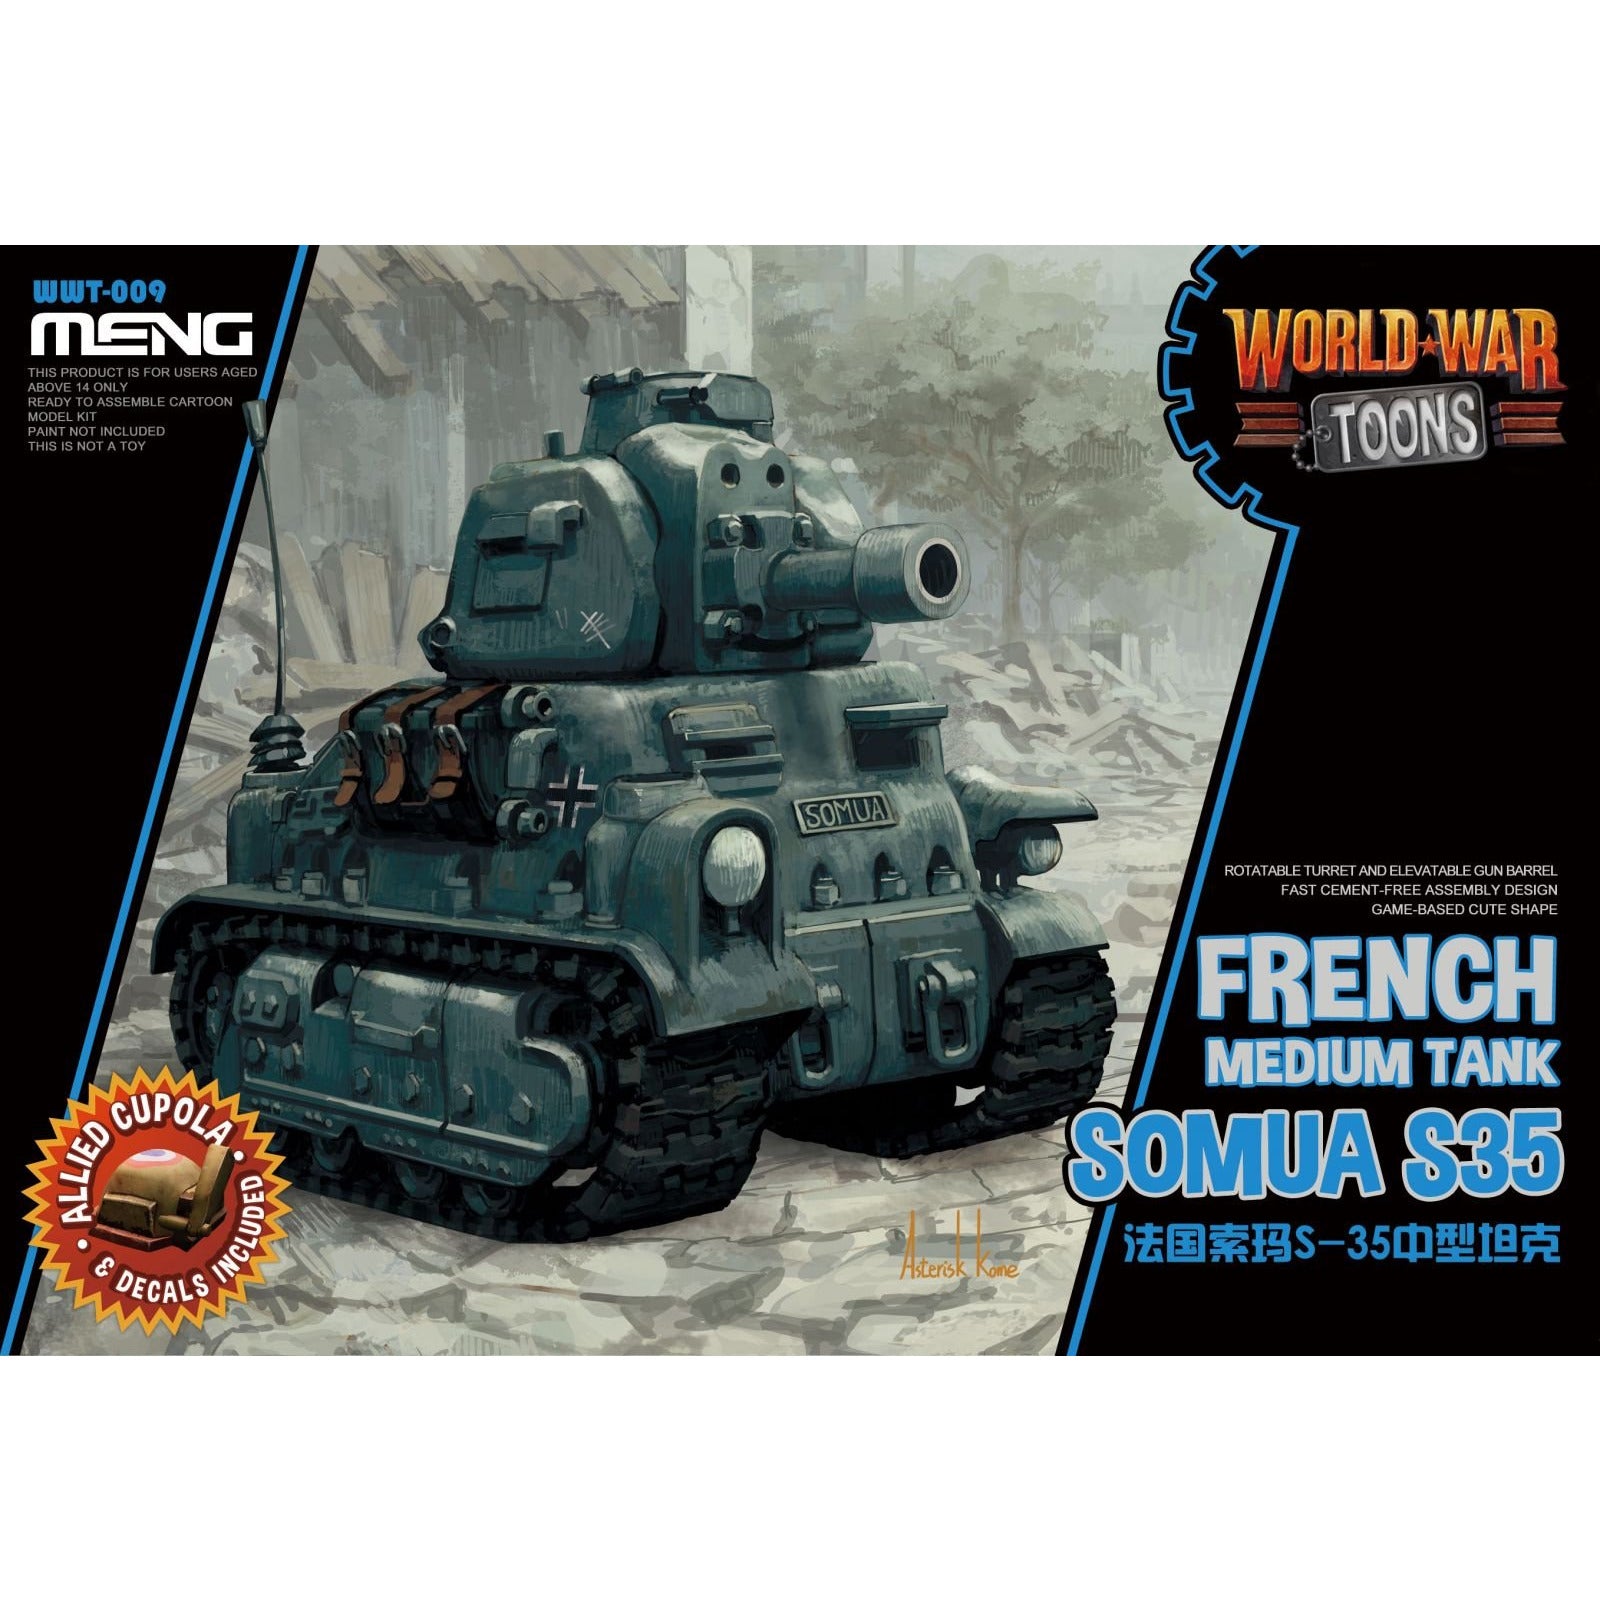 Somua S35 French Medium Tank WWT-009 World War Toons by Meng